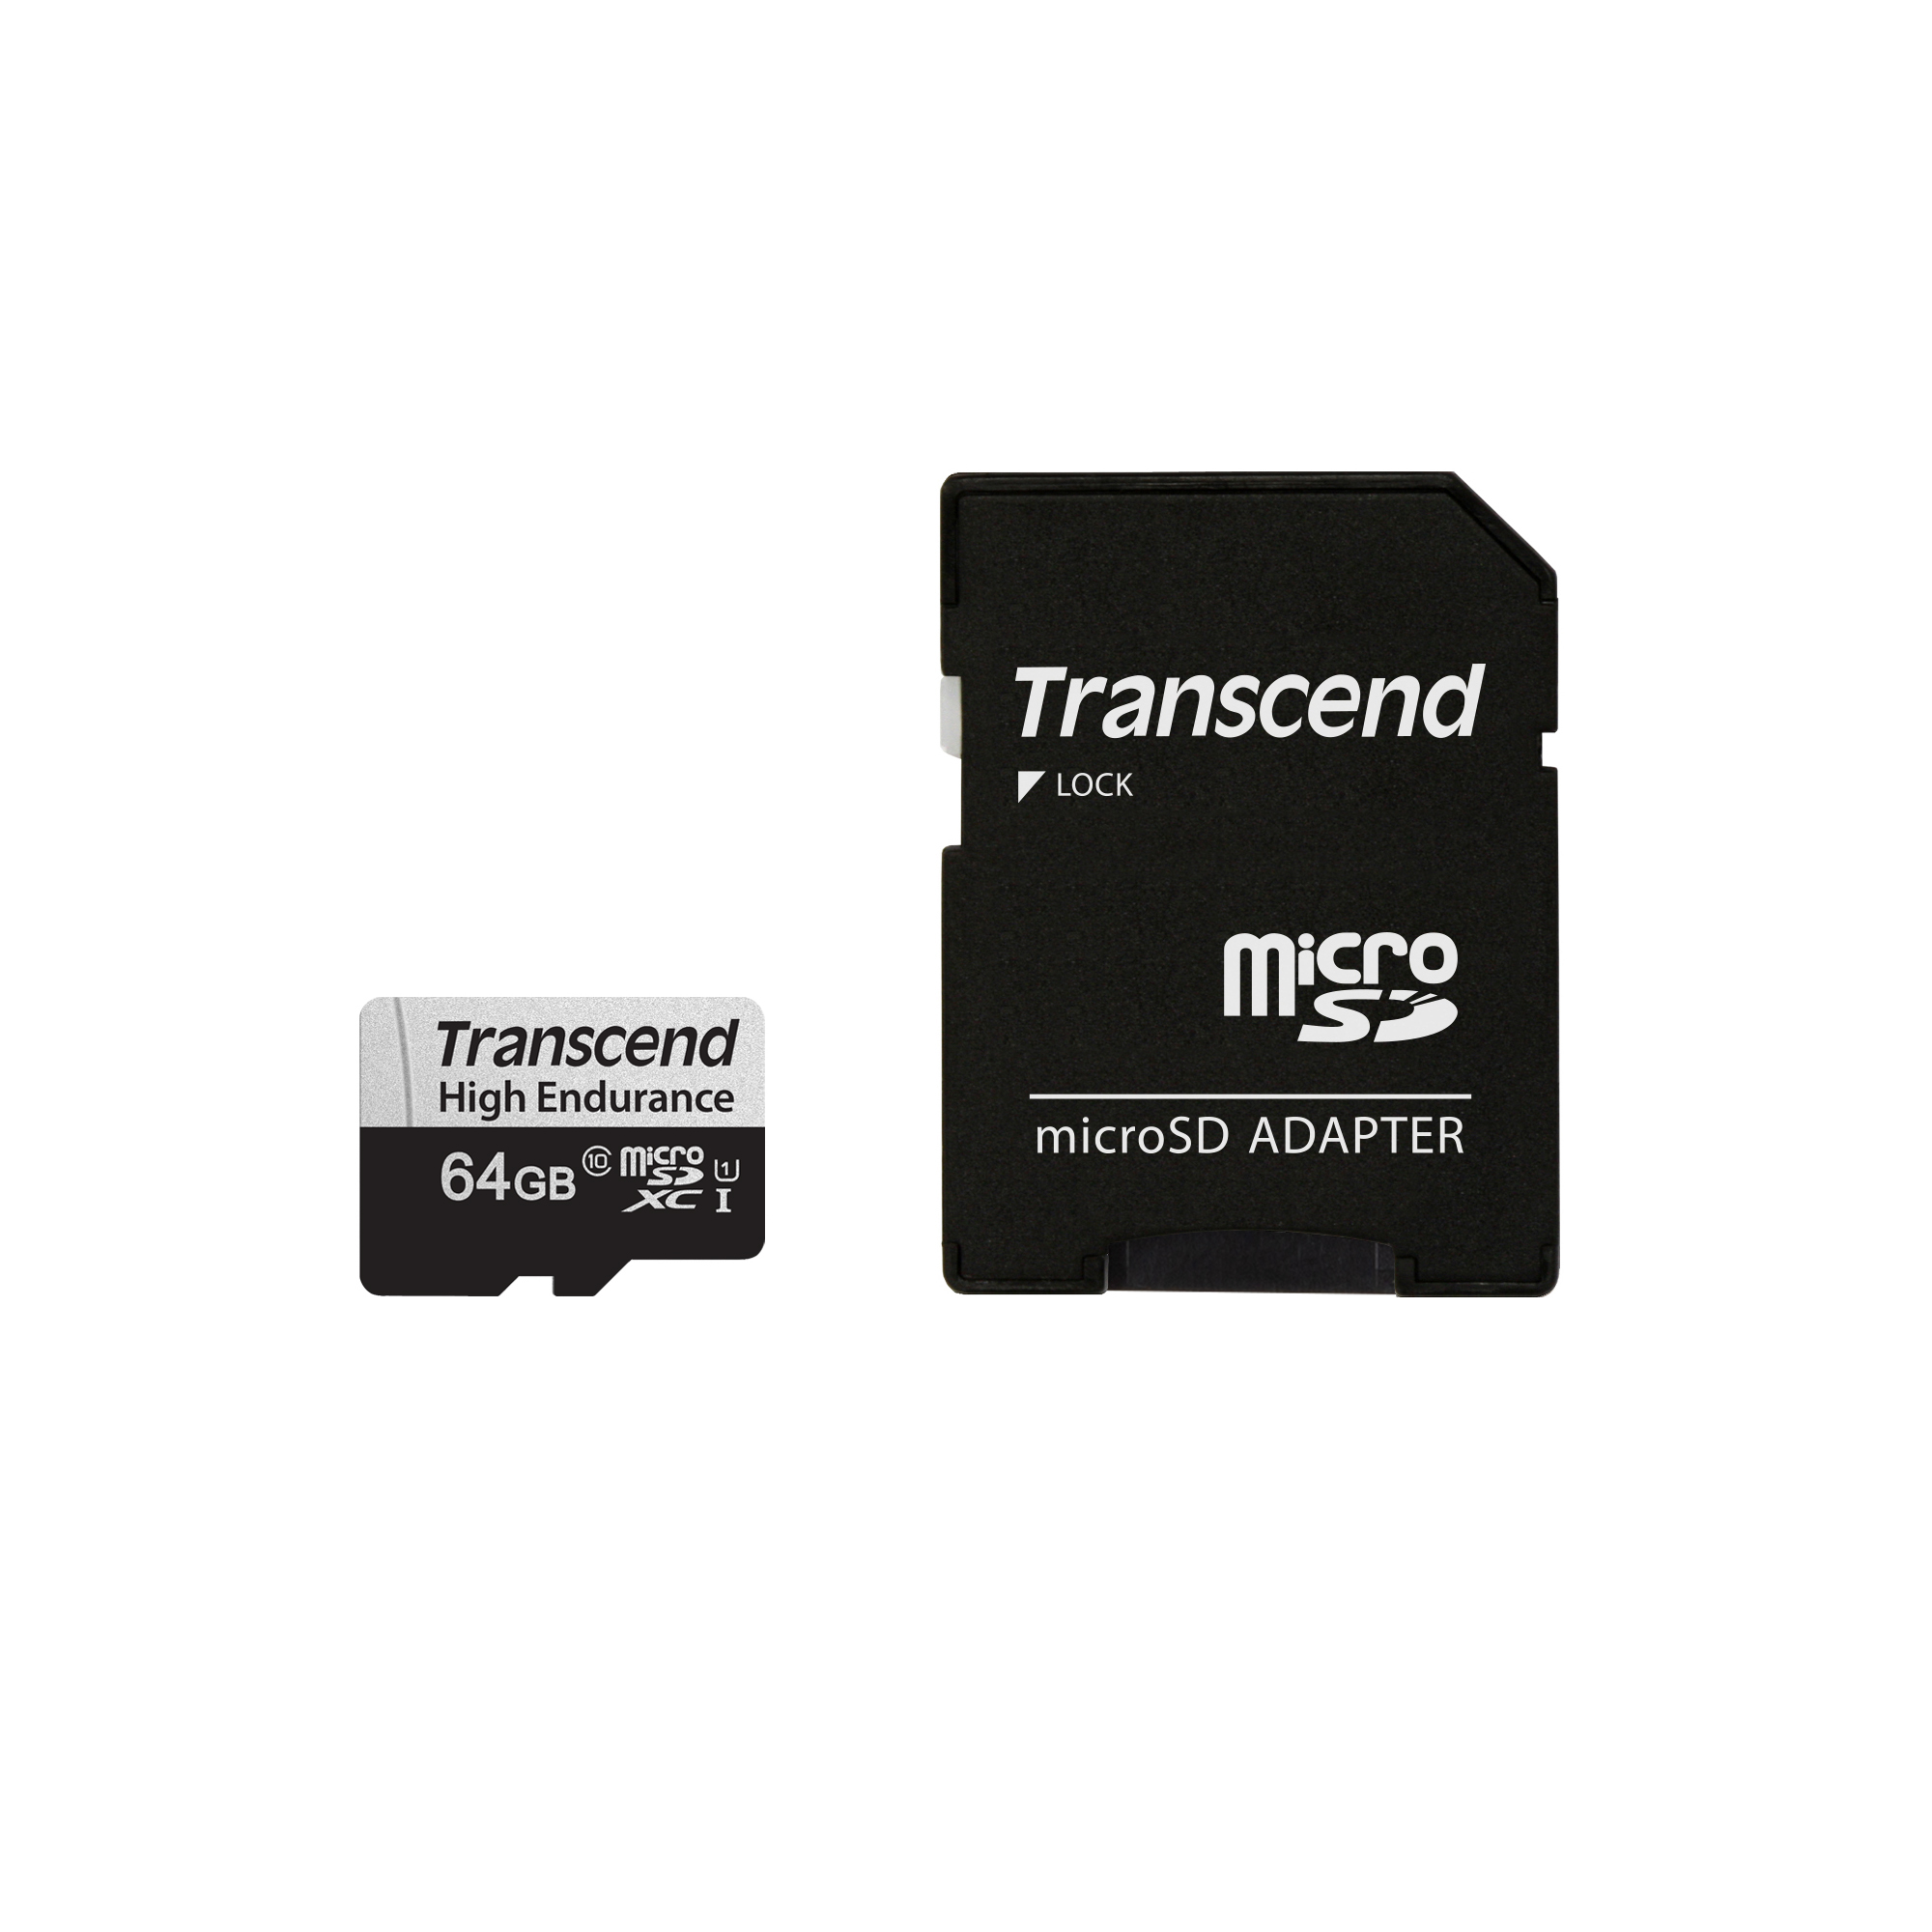 Карта памяти трансенд. Карта памяти 16gb Transcend ts16gusd300s-a MICROSDHC class 10 u1 300s + адаптер. Карта памяти MICROSD 512gb. Карта памяти Transcend MICROSDXC 300s class 10 UHS-I u1 64gb + SD Adapter. Карта памяти Transcend 300s MICROSDXC 64 ГБ [ts64gusd300s-a].